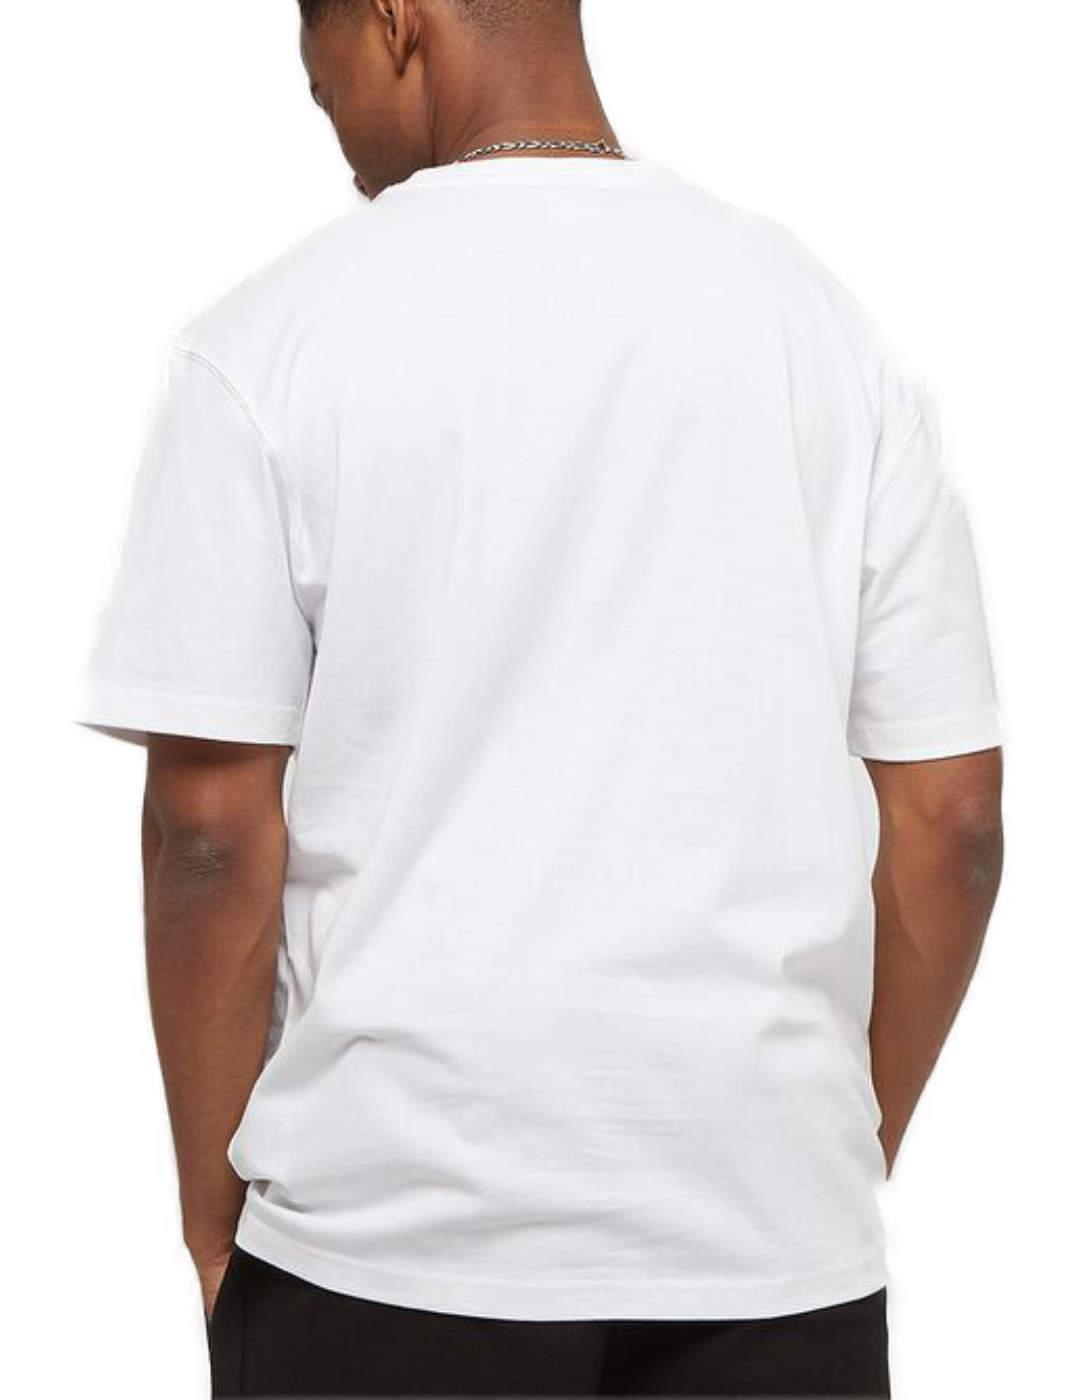 Camiseta Puma Dowtown blanco manga corta para hombre